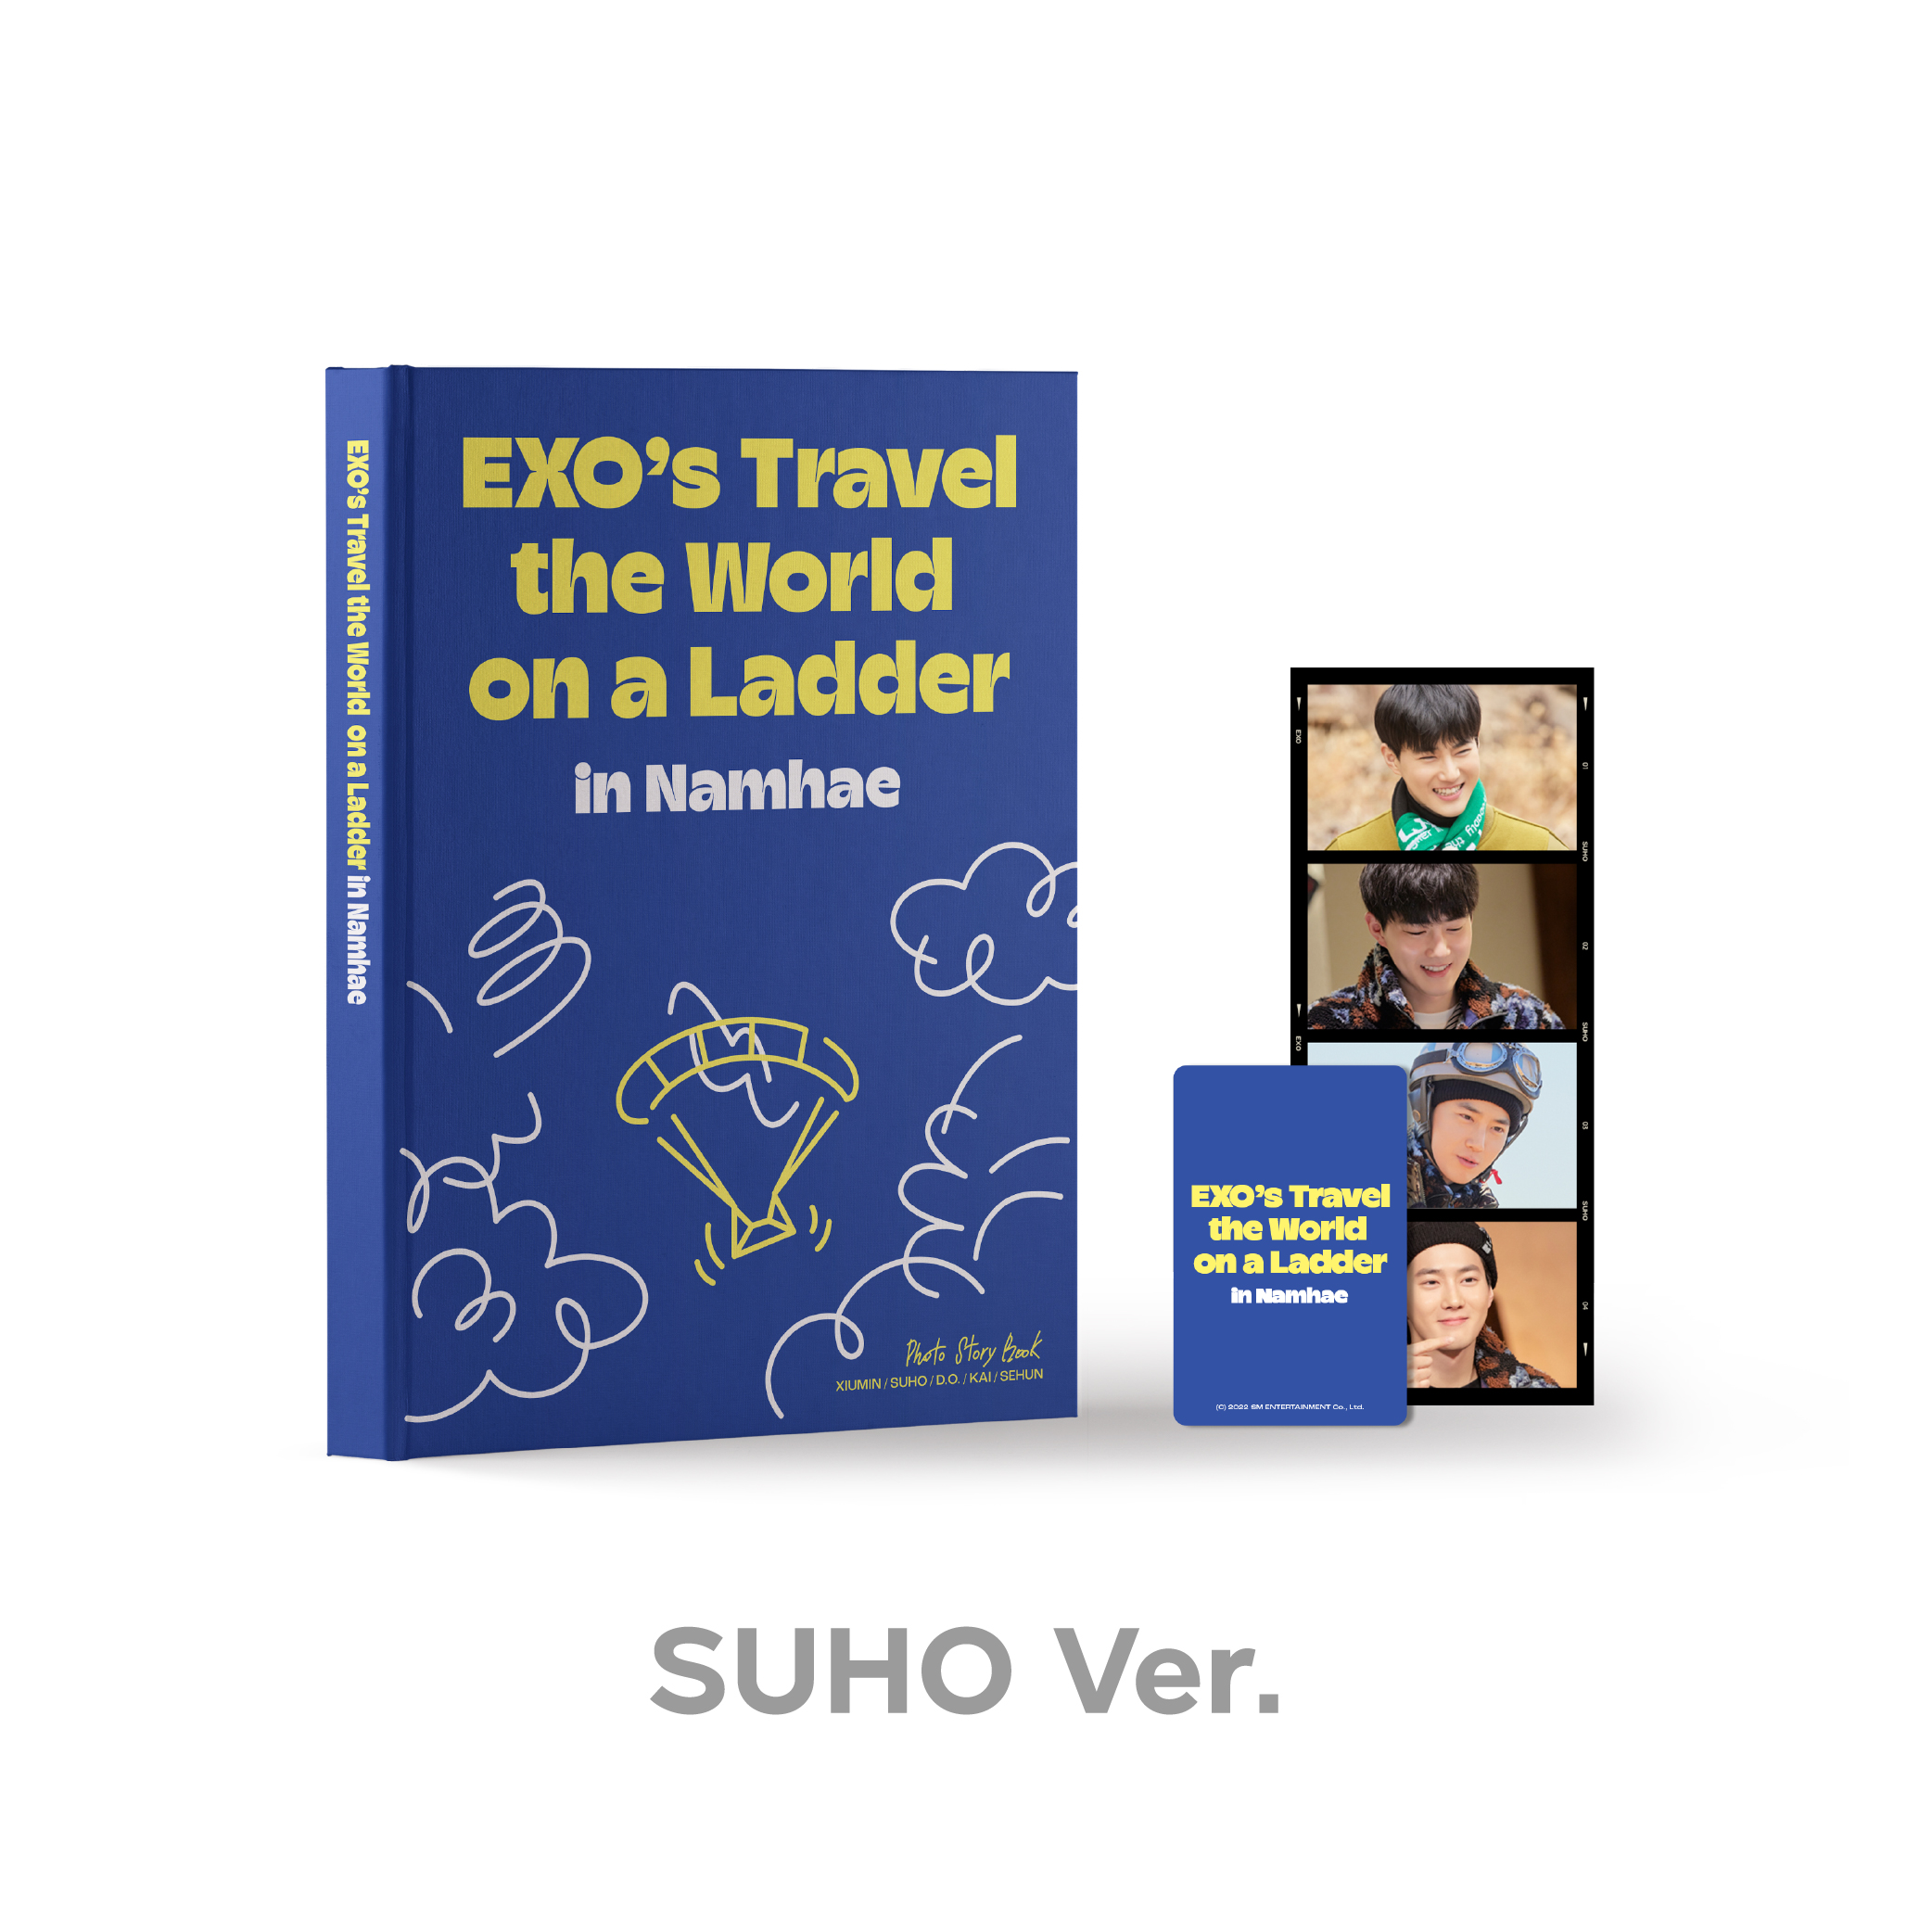 EXO(엑소) - <엑소의 사다리 타고 세계여행 - 남해 편> PHOTO STORY BOOK [SUHO Ver.]